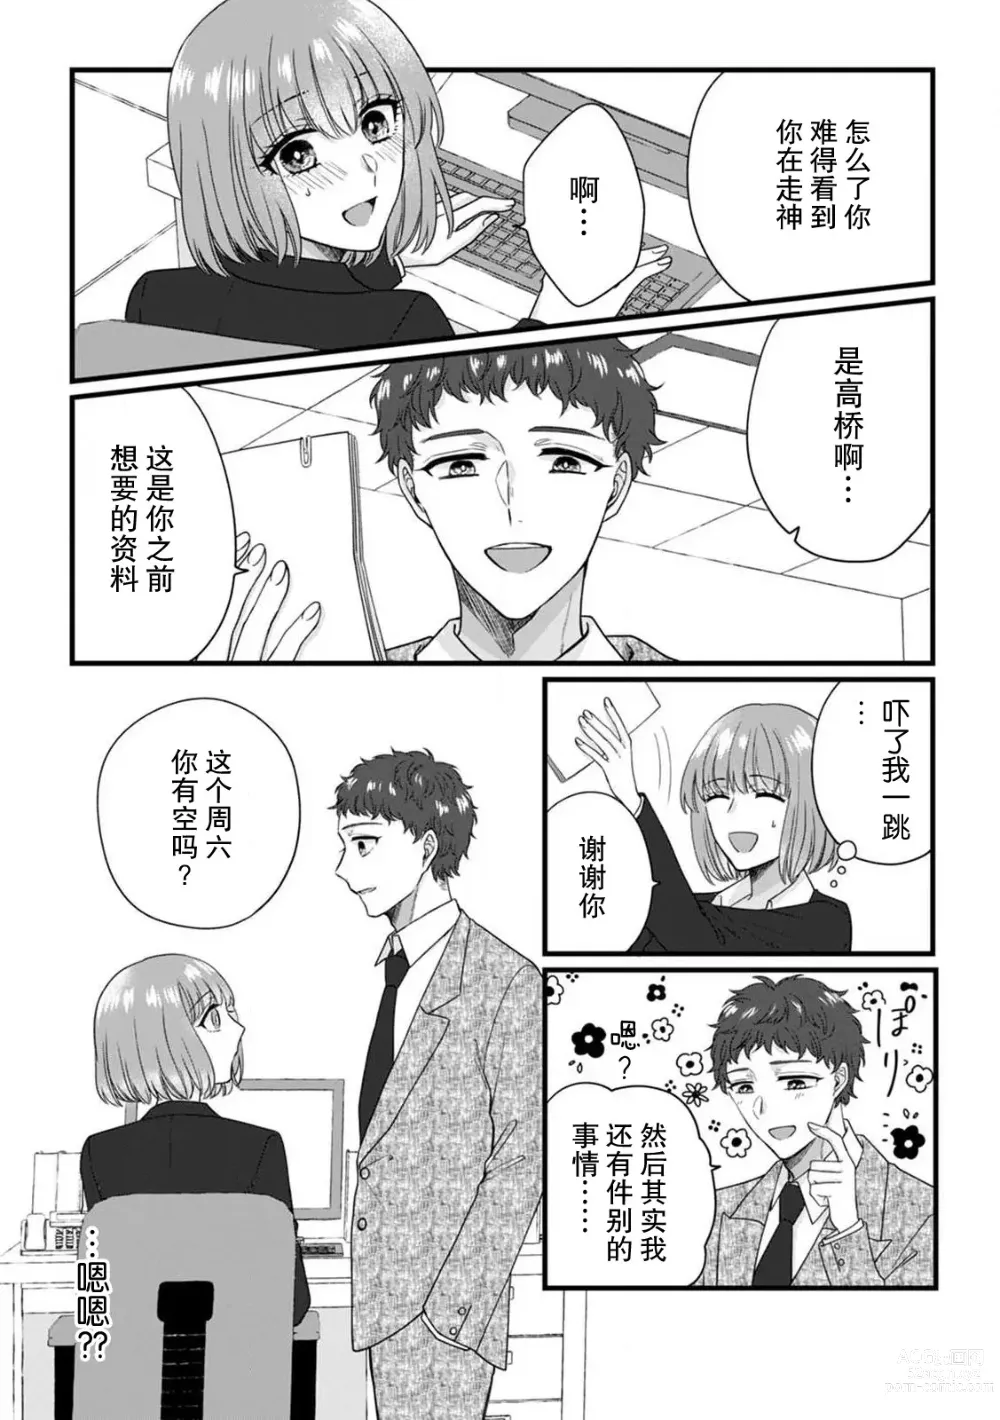 Page 21 of manga 弄湿我的是青梅竹马的男大姐 第一次见到……他认真的雄性一面。 1-5 end